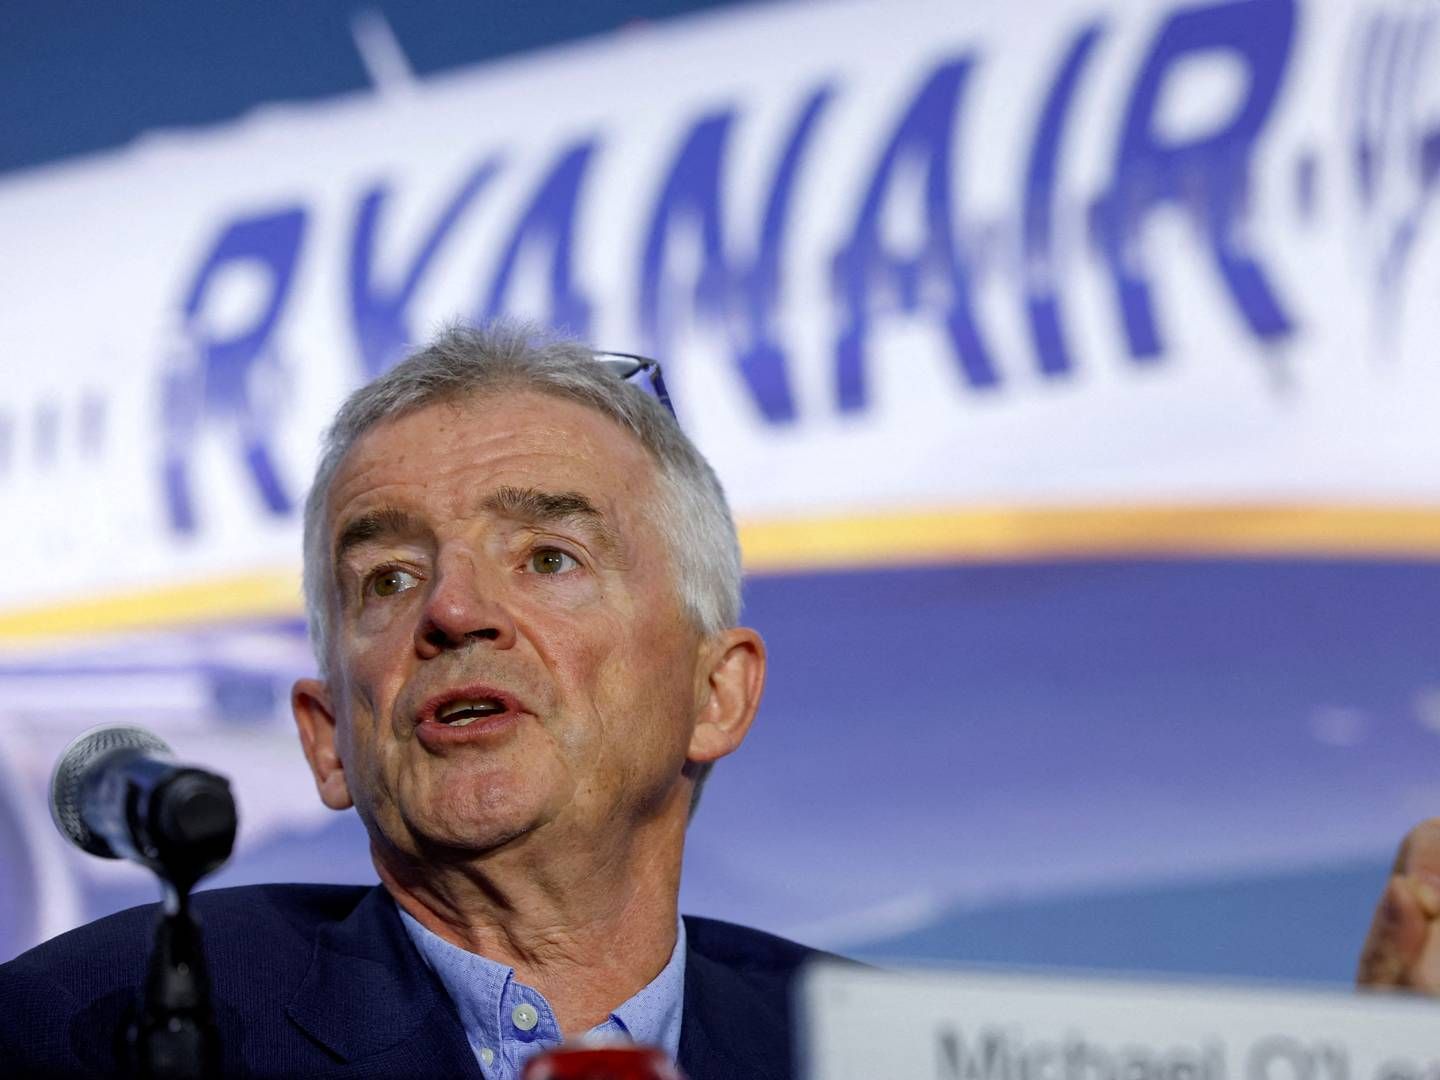 Ryanairs administrerende direktør, Michael O’Leary | Foto: Evelyn Hockstein/Reuters/Ritzau Scanpix